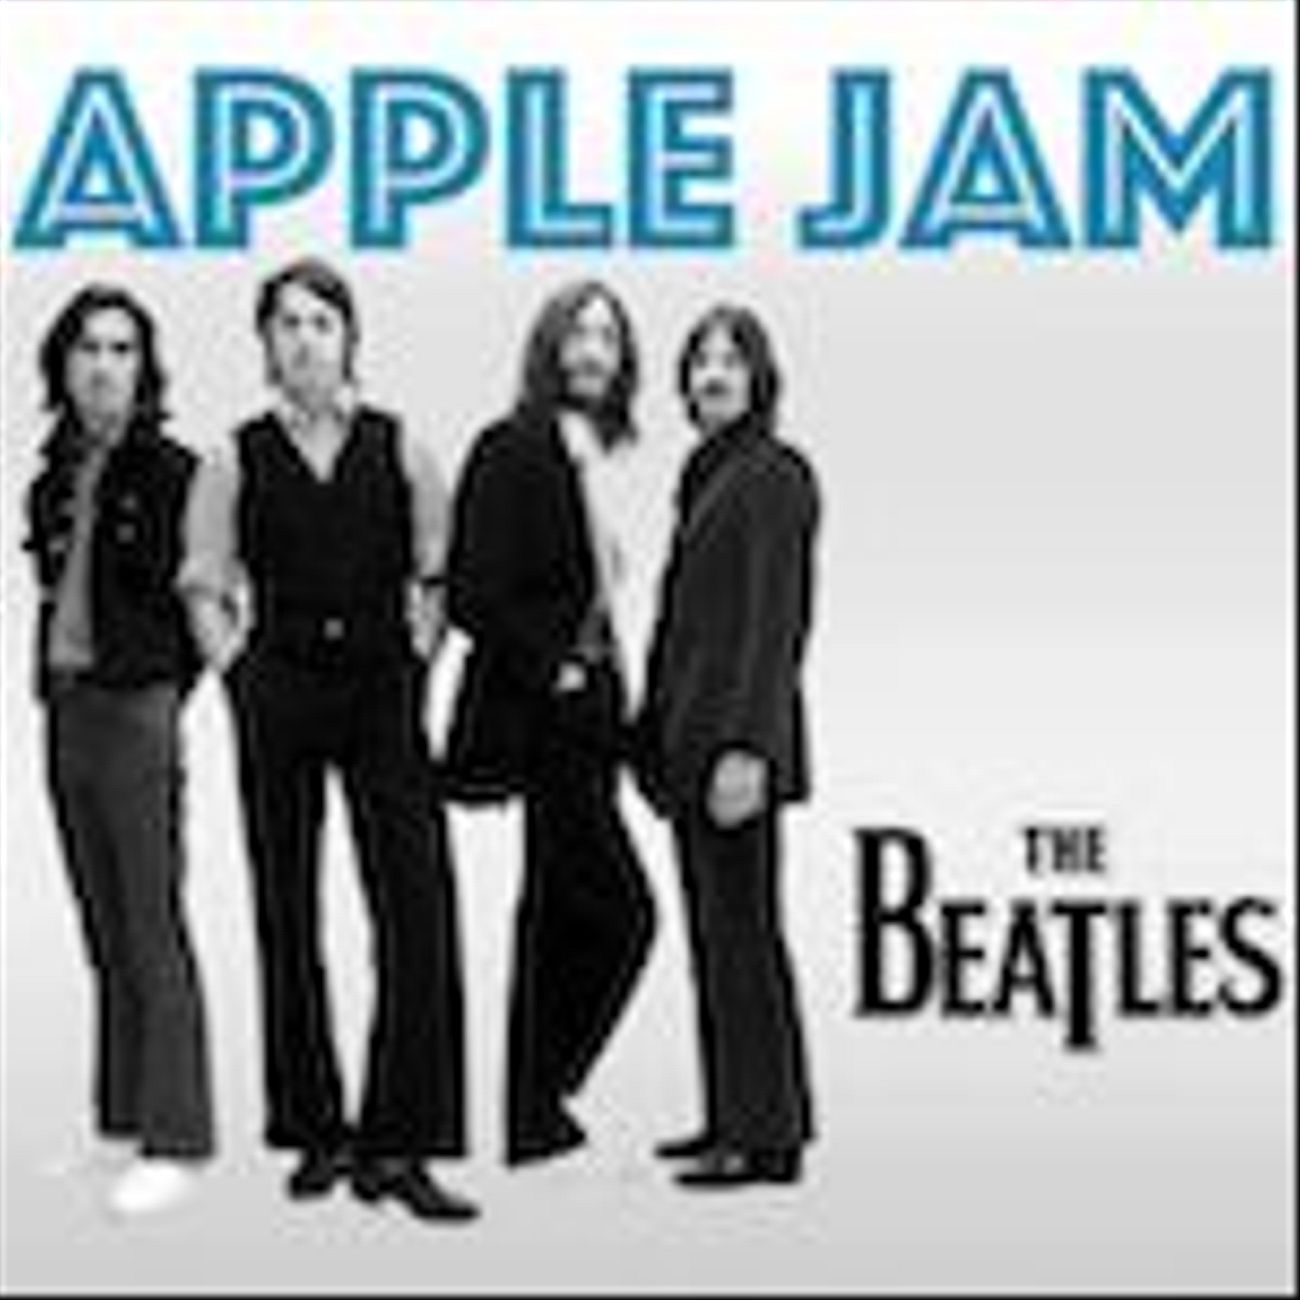 The Beatles - Apple Jam